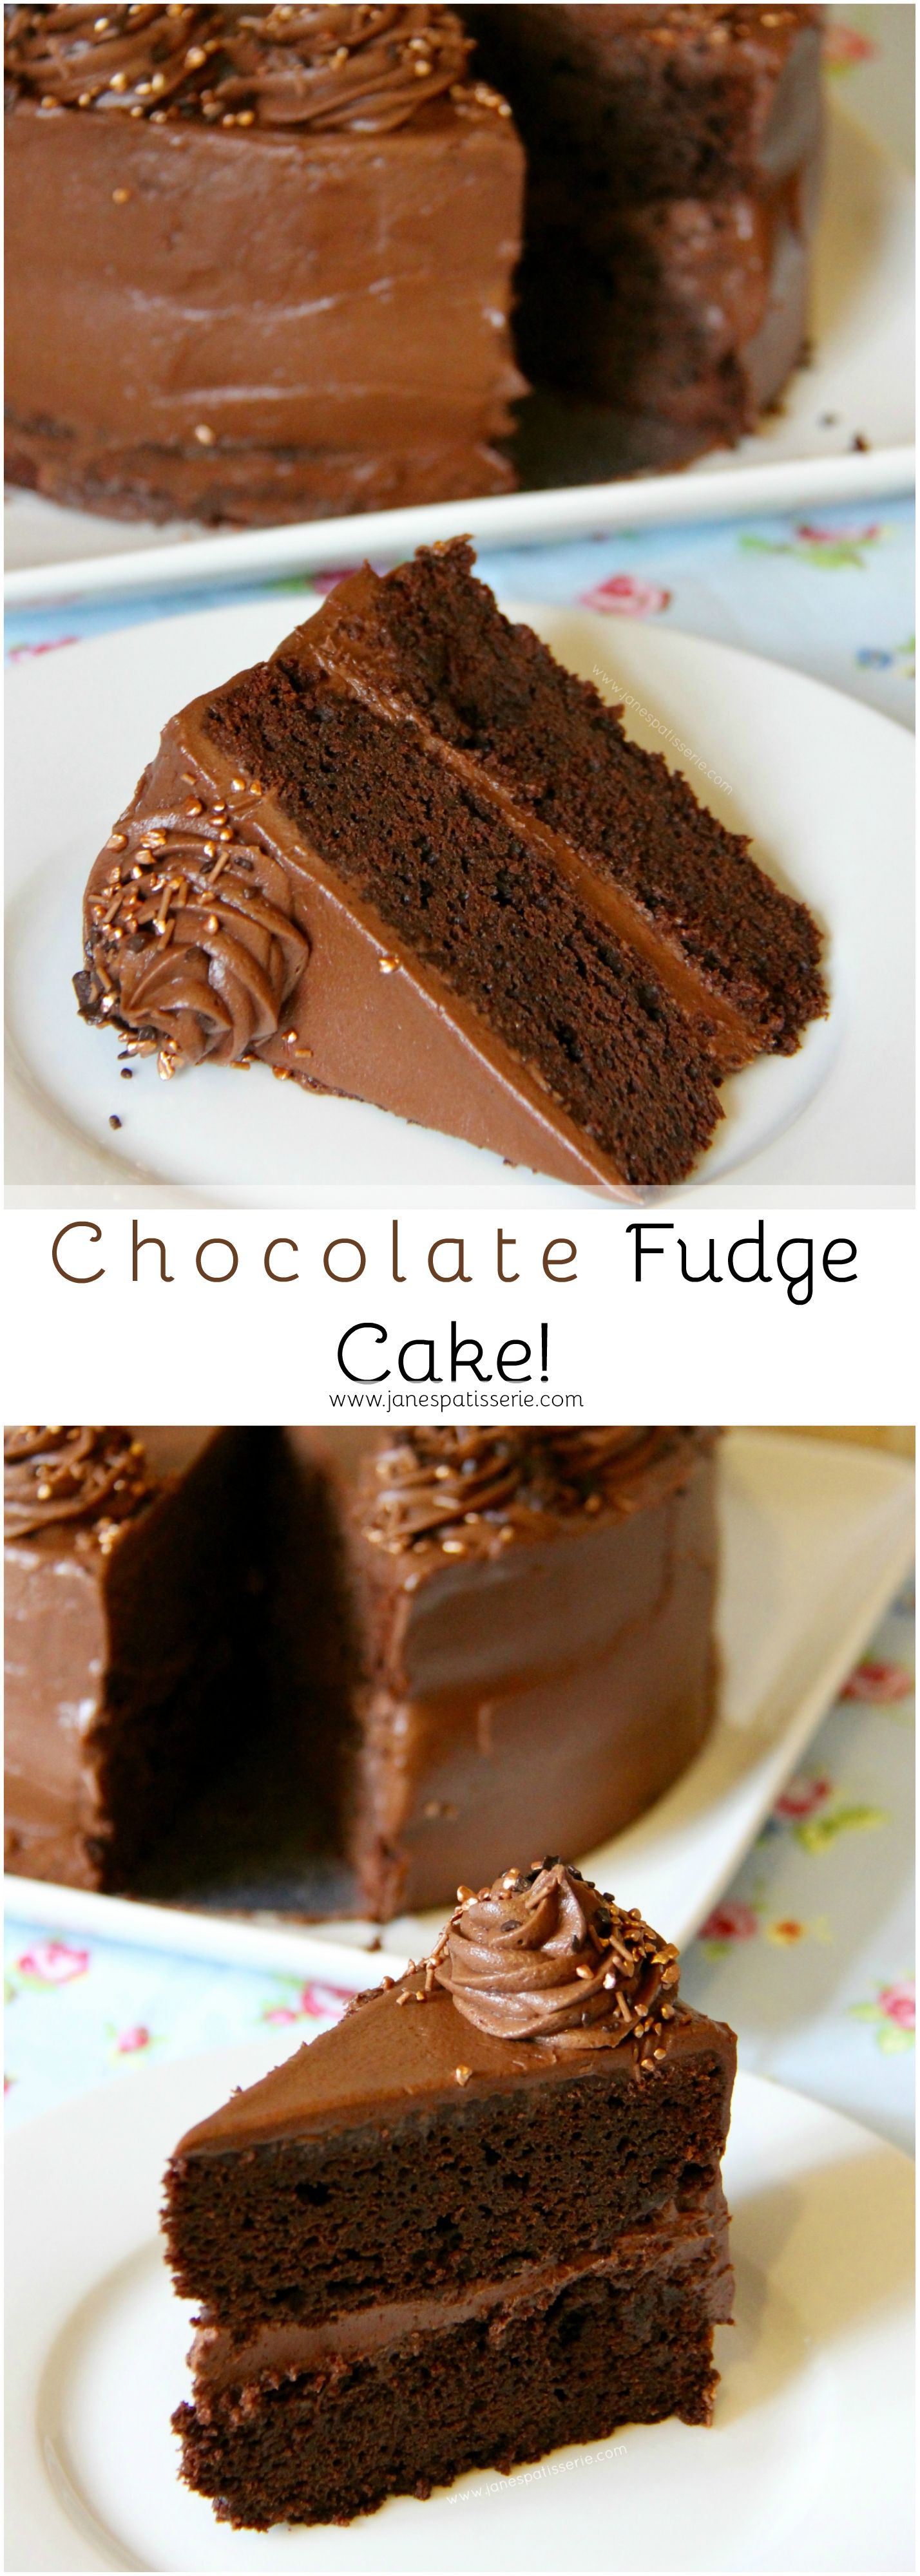 Chocolate Fudge Cake Recipe Chocolate Fudge Cake Chocolate Fudge And Carnation